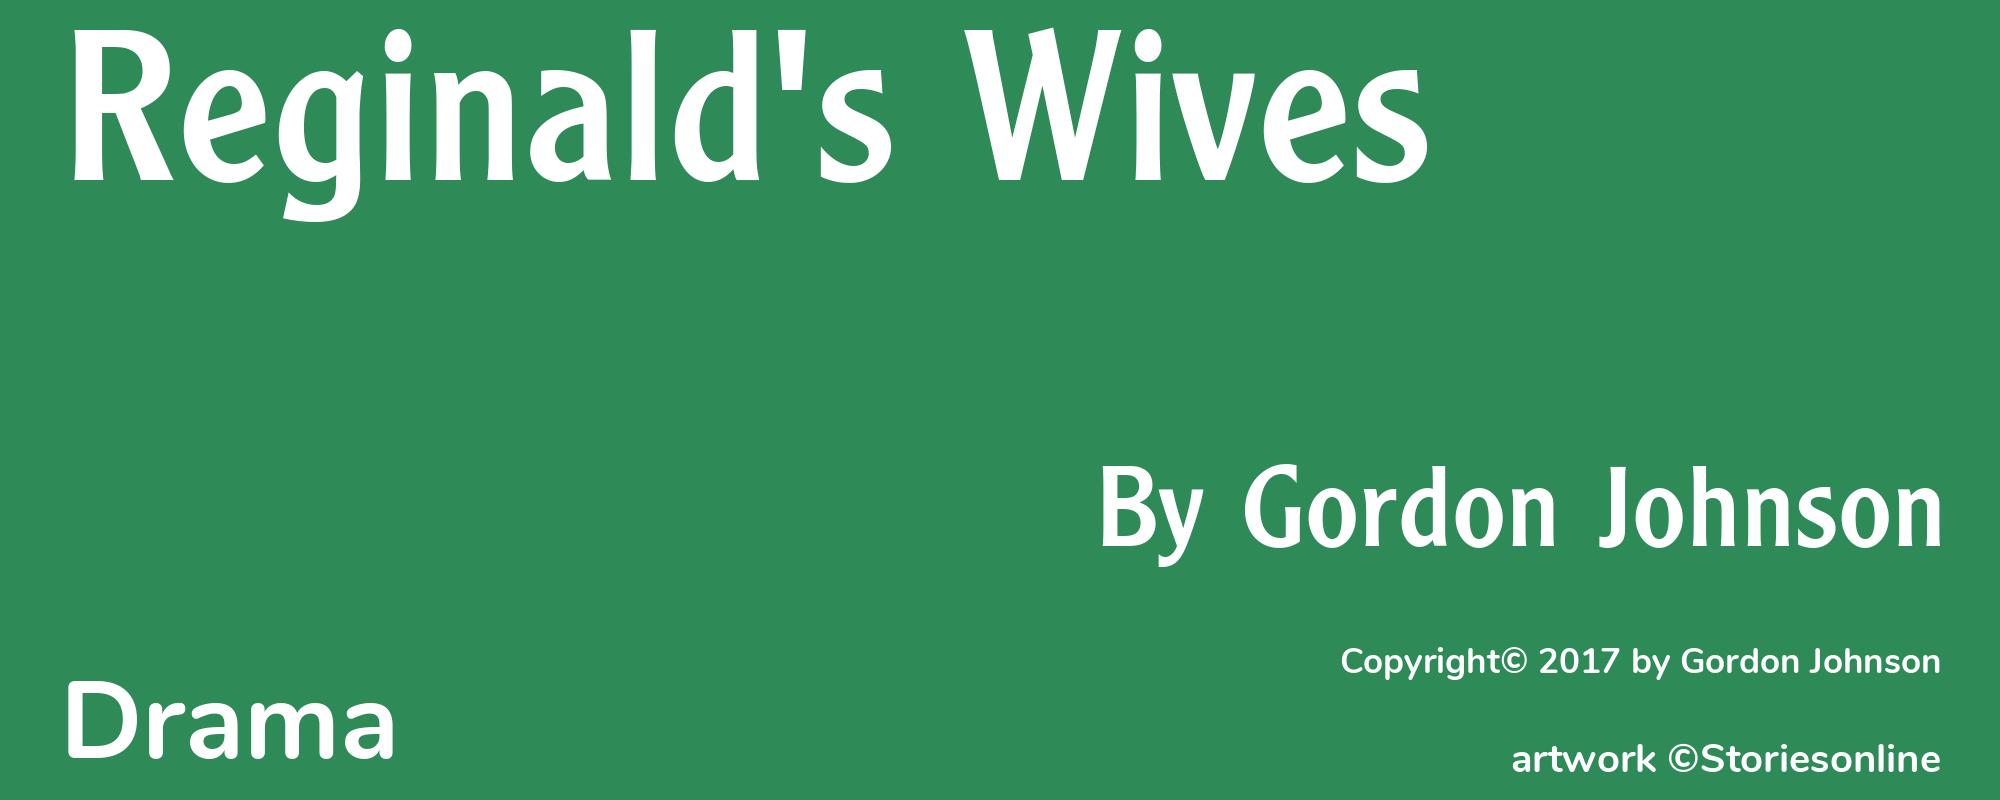 Reginald's Wives - Cover